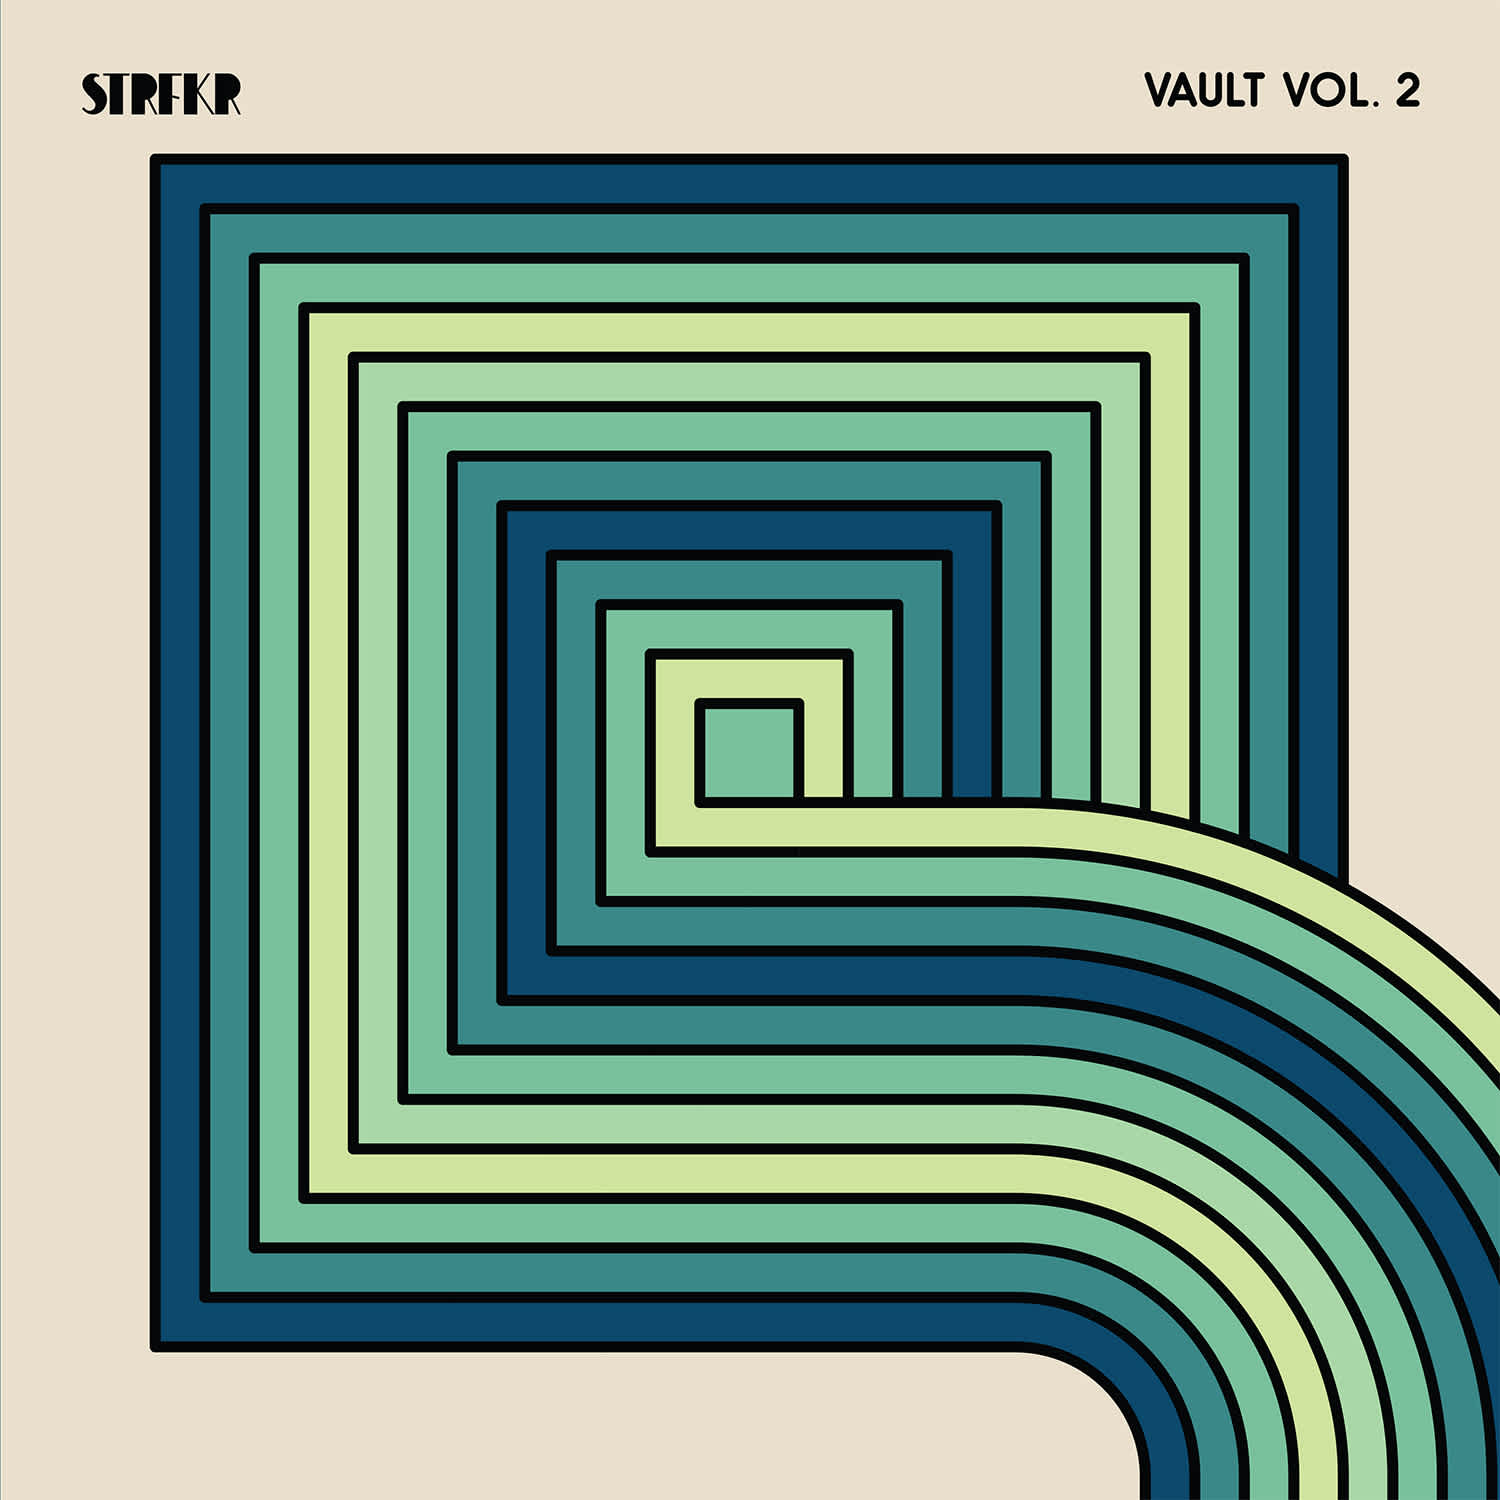 Vault Vol. 2 by STRFKR